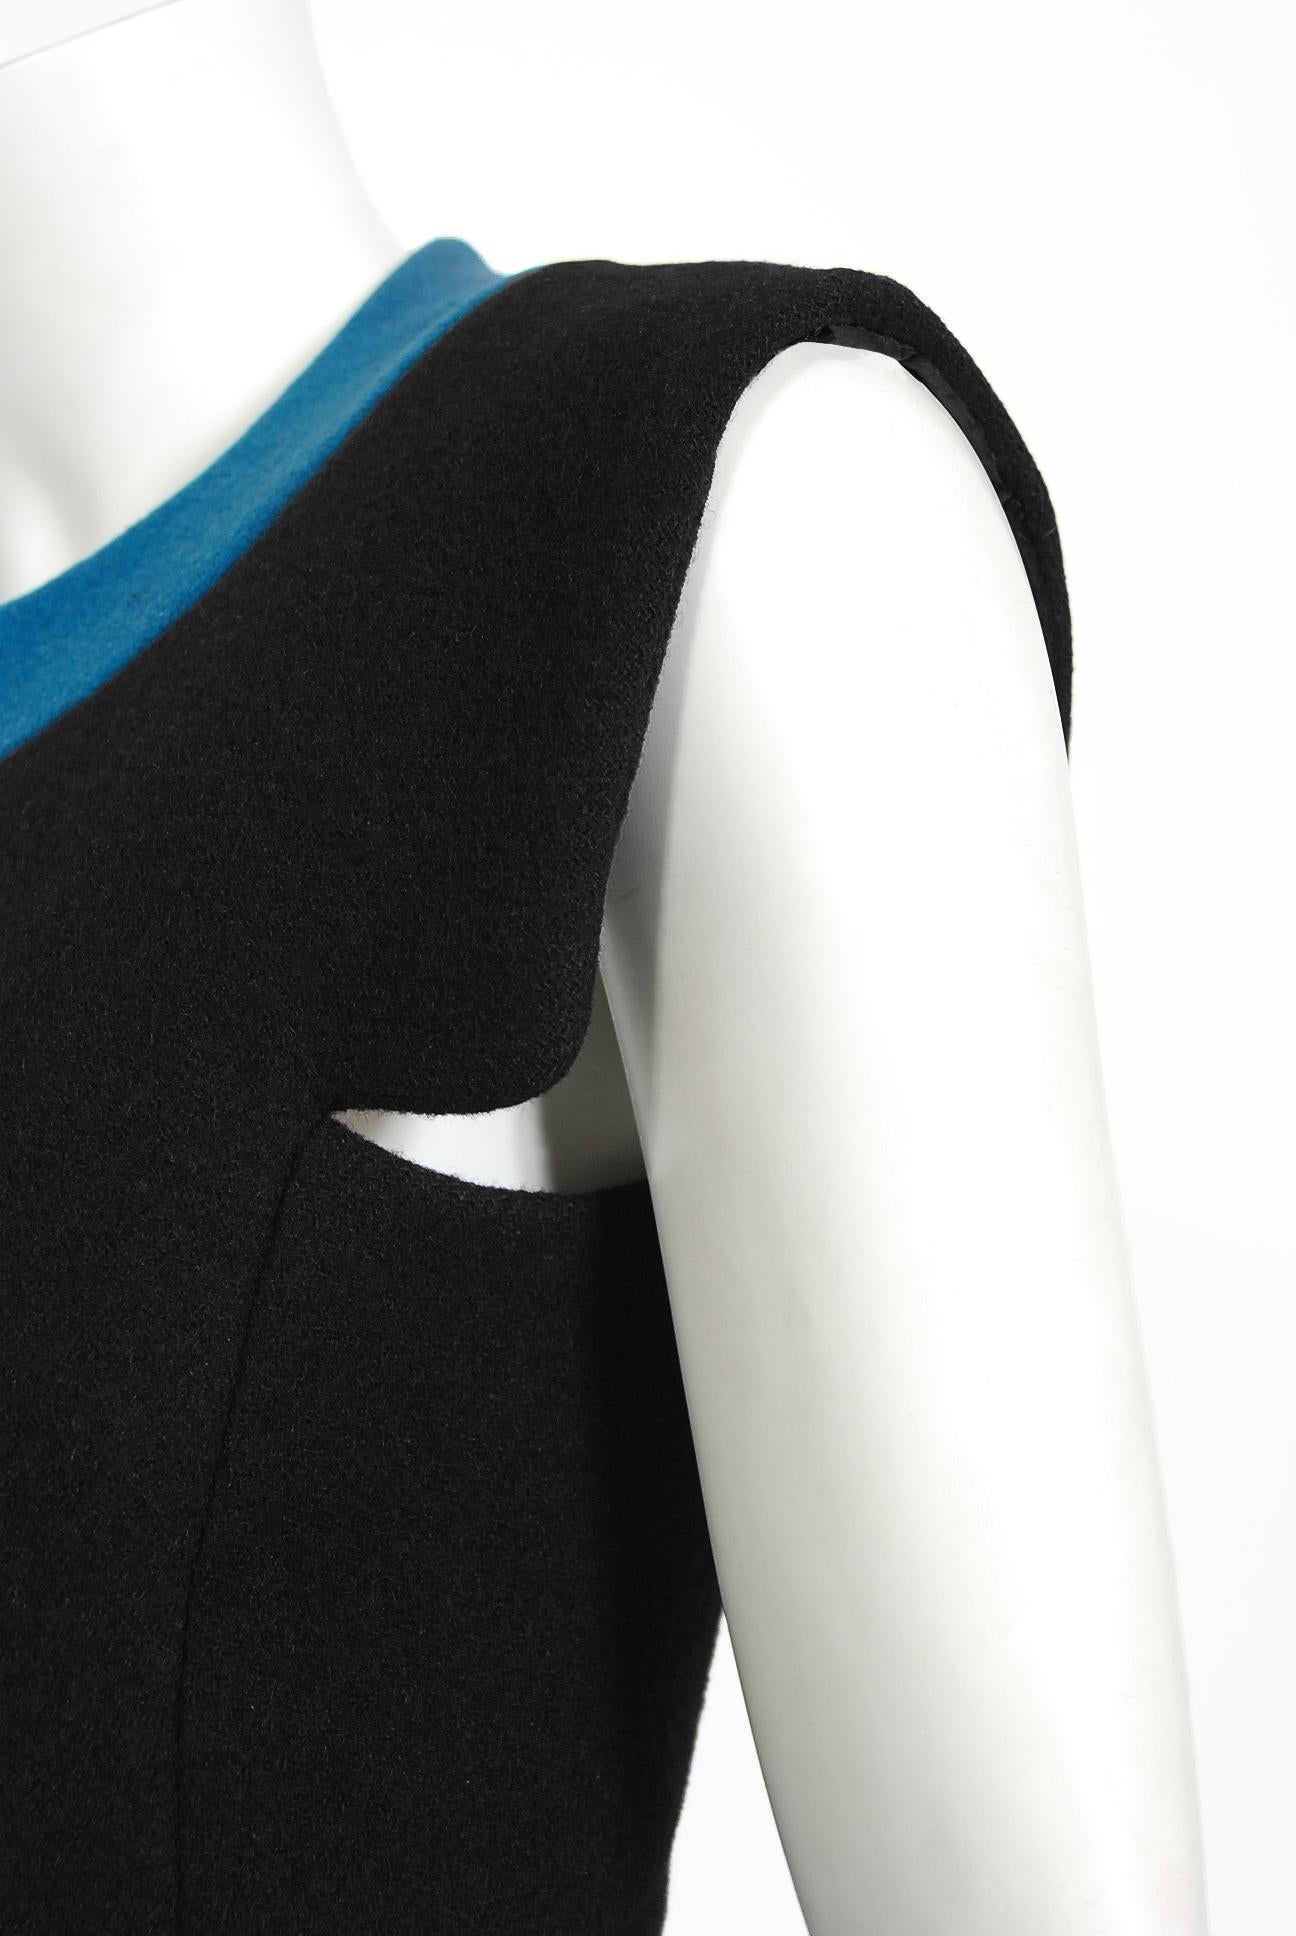 Vintage 1972 Pierre Cardin Documented Black & Blue Block-Color Wool Mod Dress   1